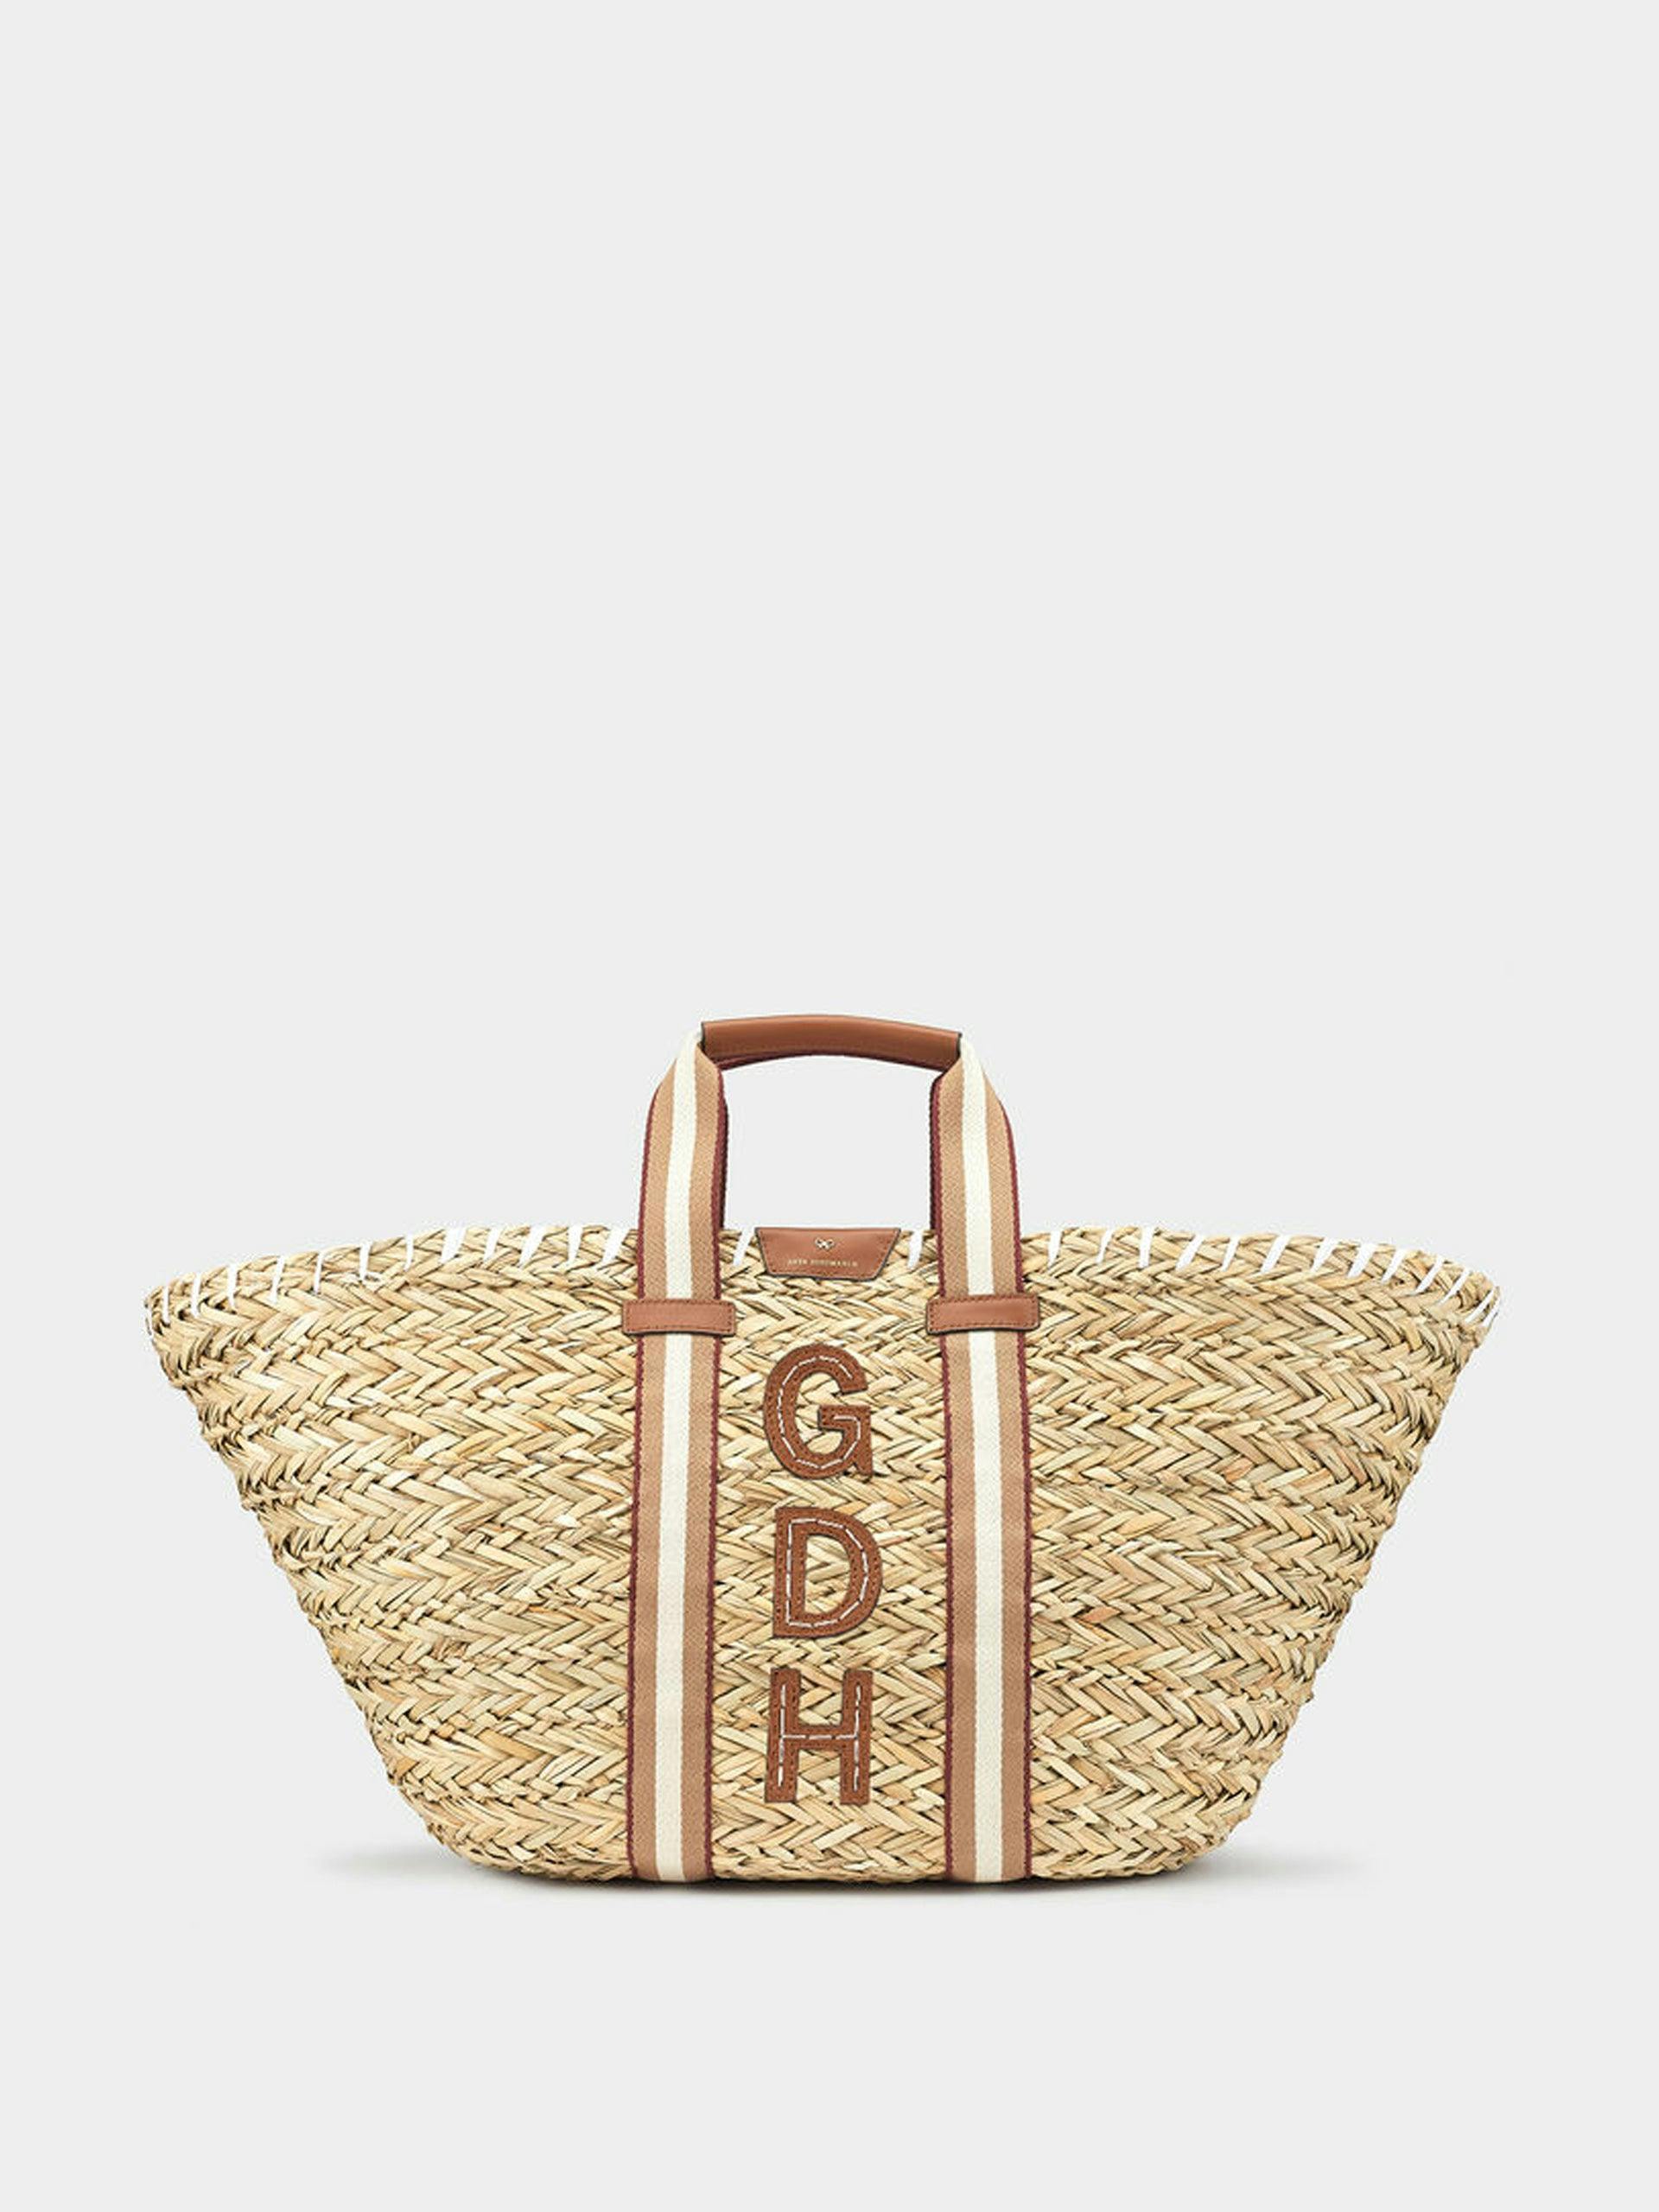 Personalised seagrass basket bag